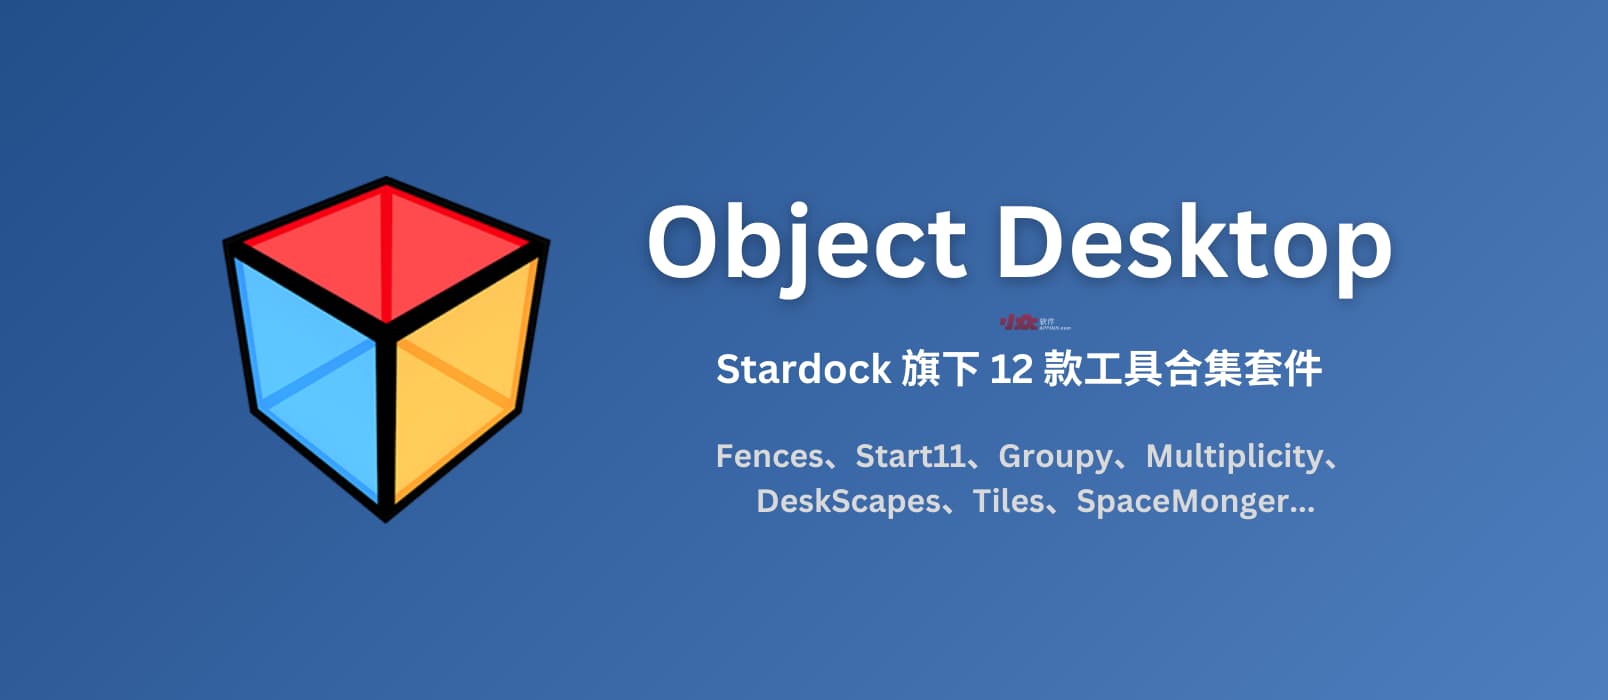 Object Desktop – Windows 生产力和个性化套件：包括 Fences、Start11 等 Stardock 旗下 12 款工具